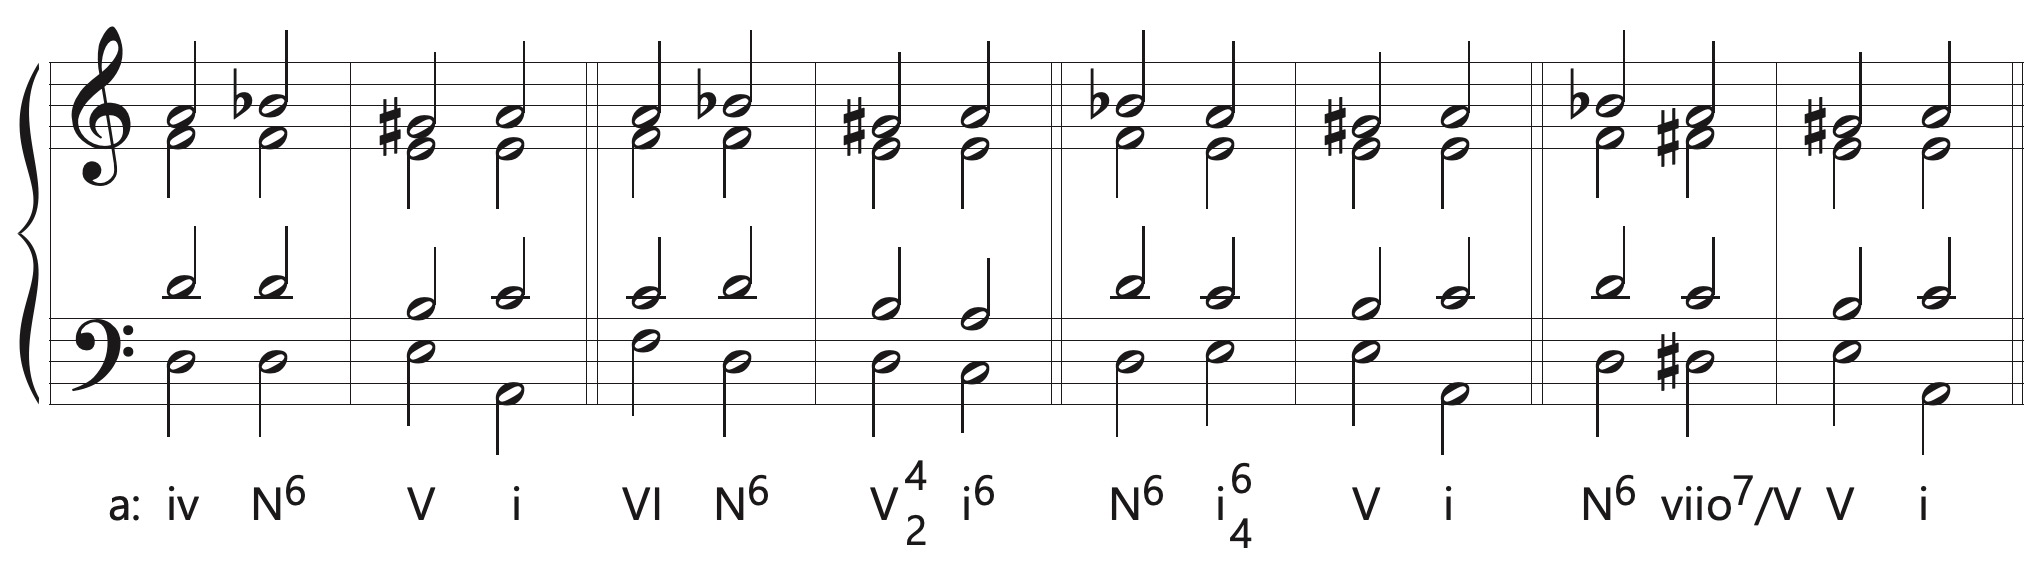 neapolitan chord part writing resolutions